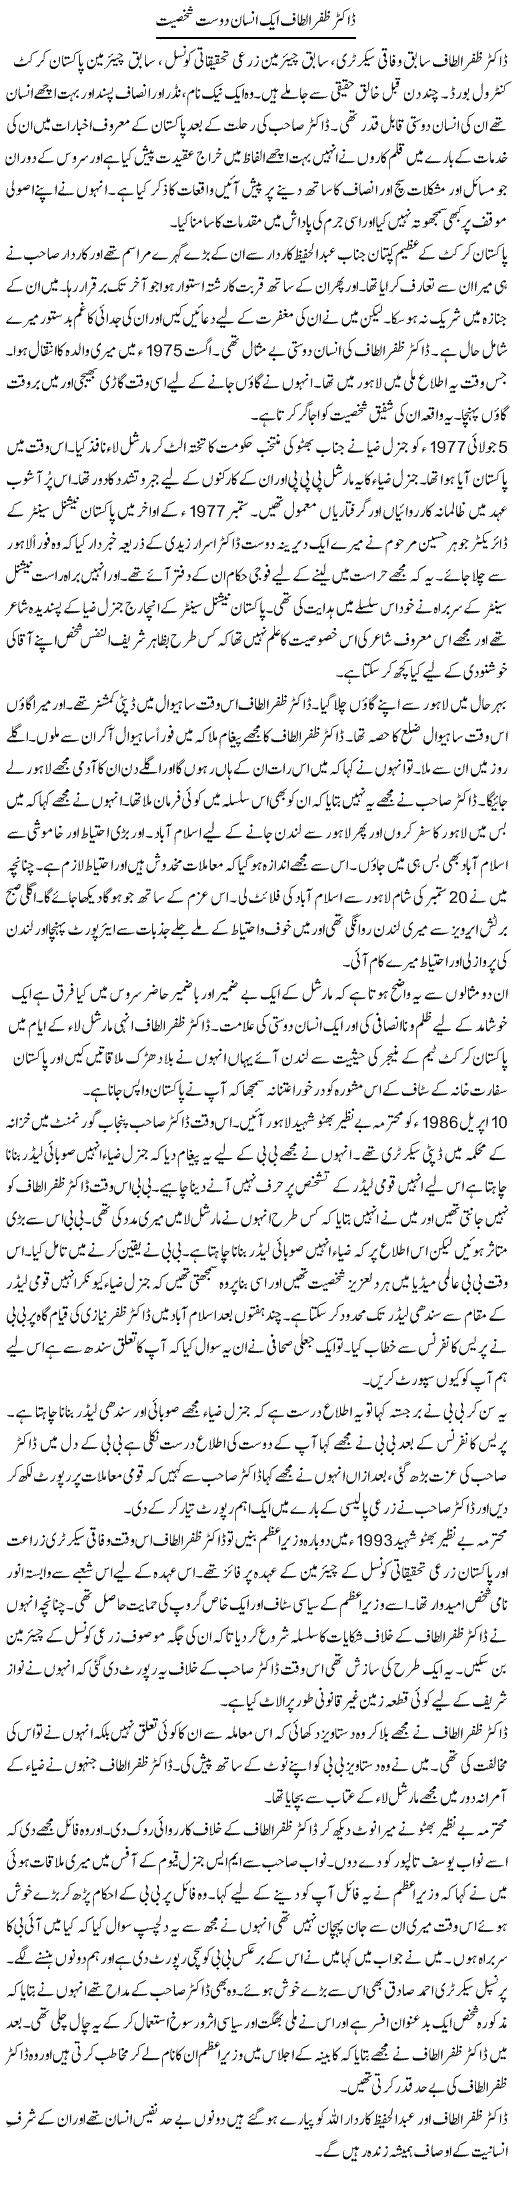 Dr. Zafar Altaf Aik Insan Dost Shakhsiat | Bashir Riaz | Daily Urdu Columns